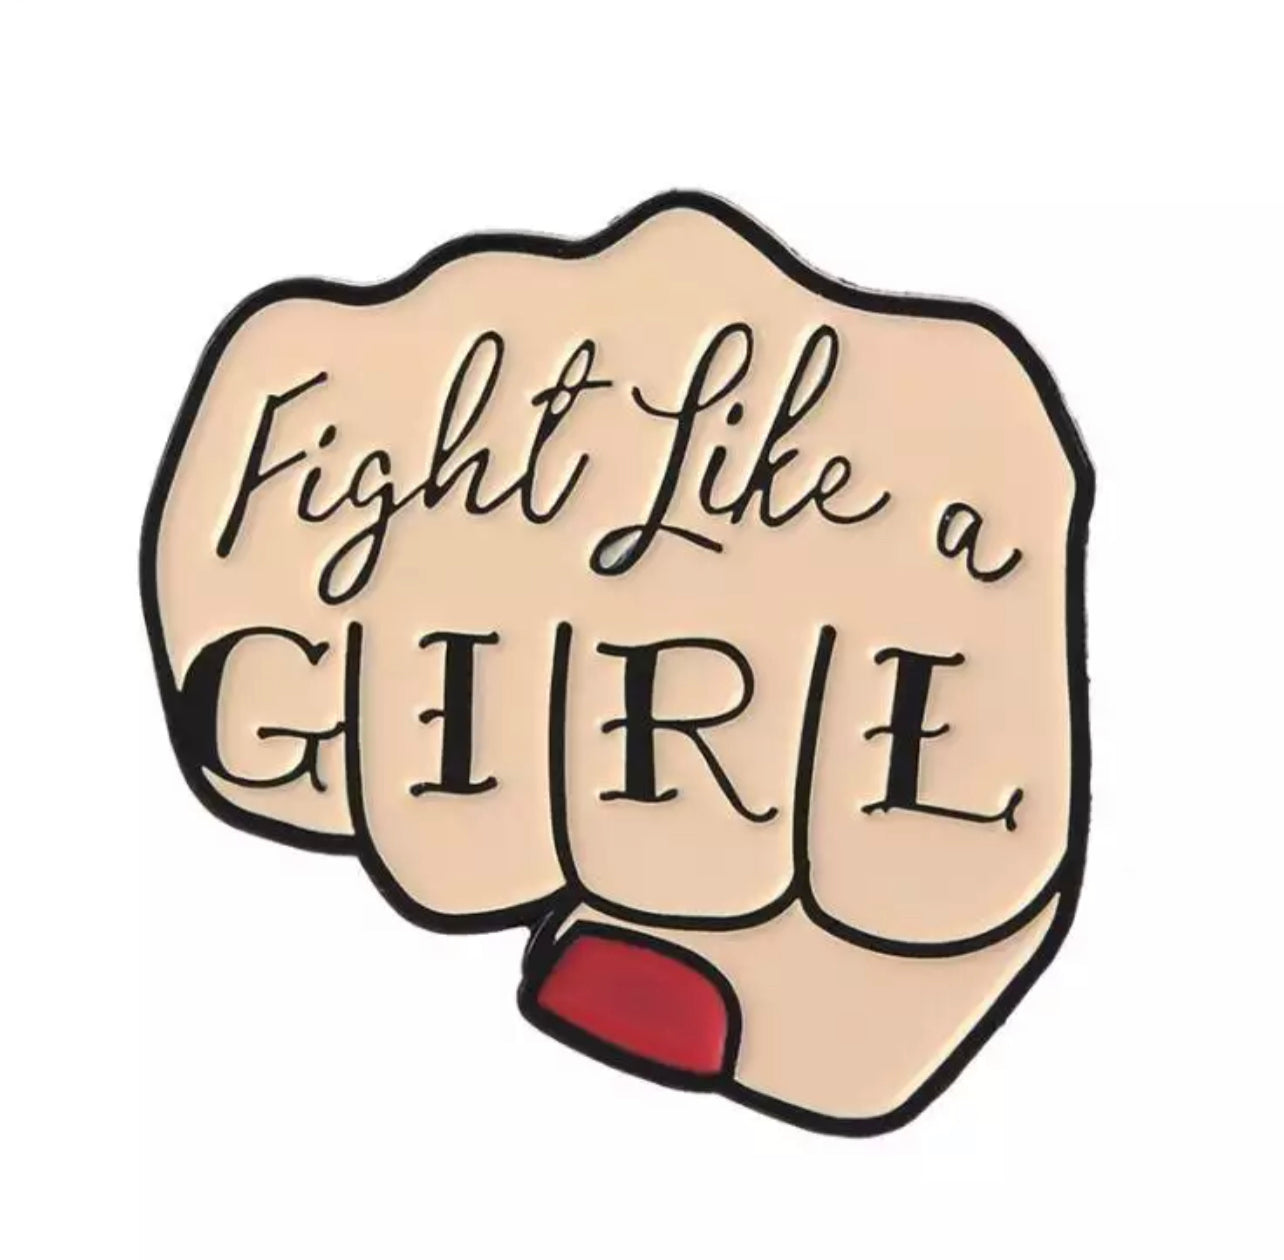 Fight Like a girl 👧